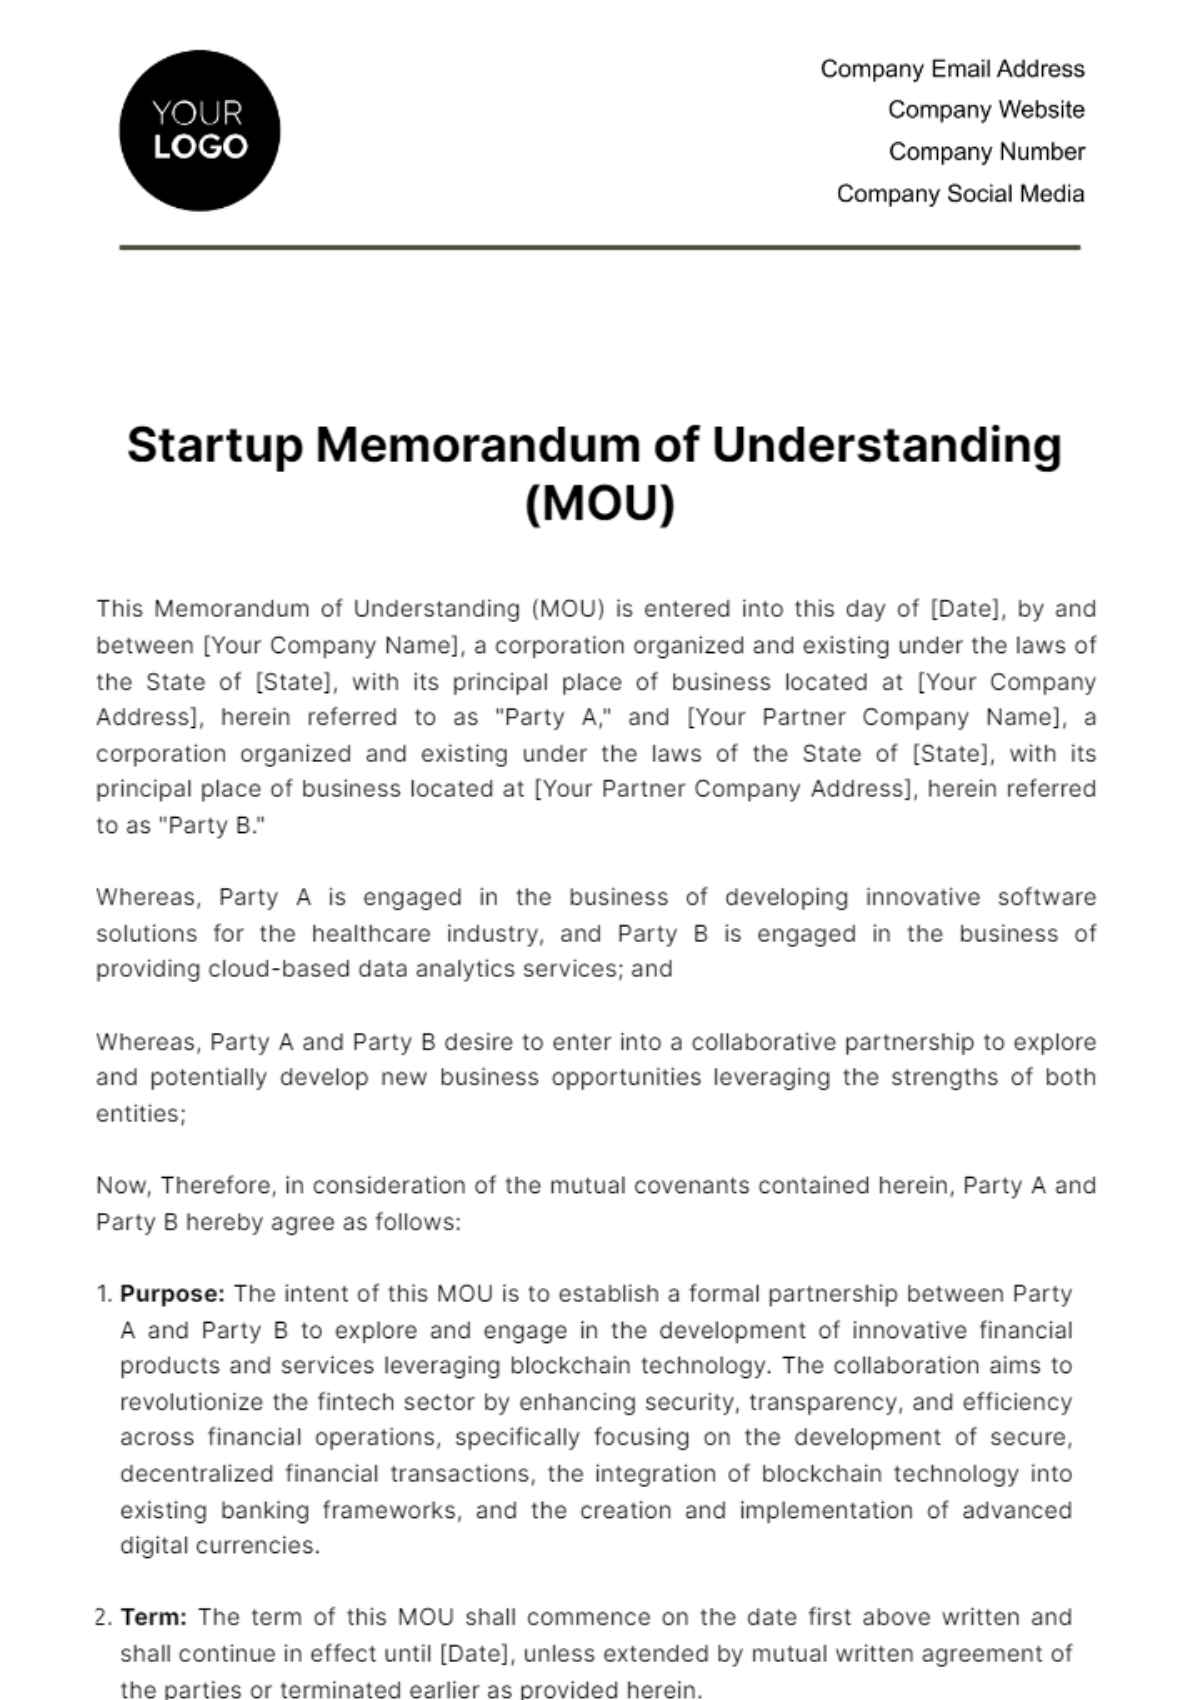 Startup Memorandum of Understanding (MOU) Template